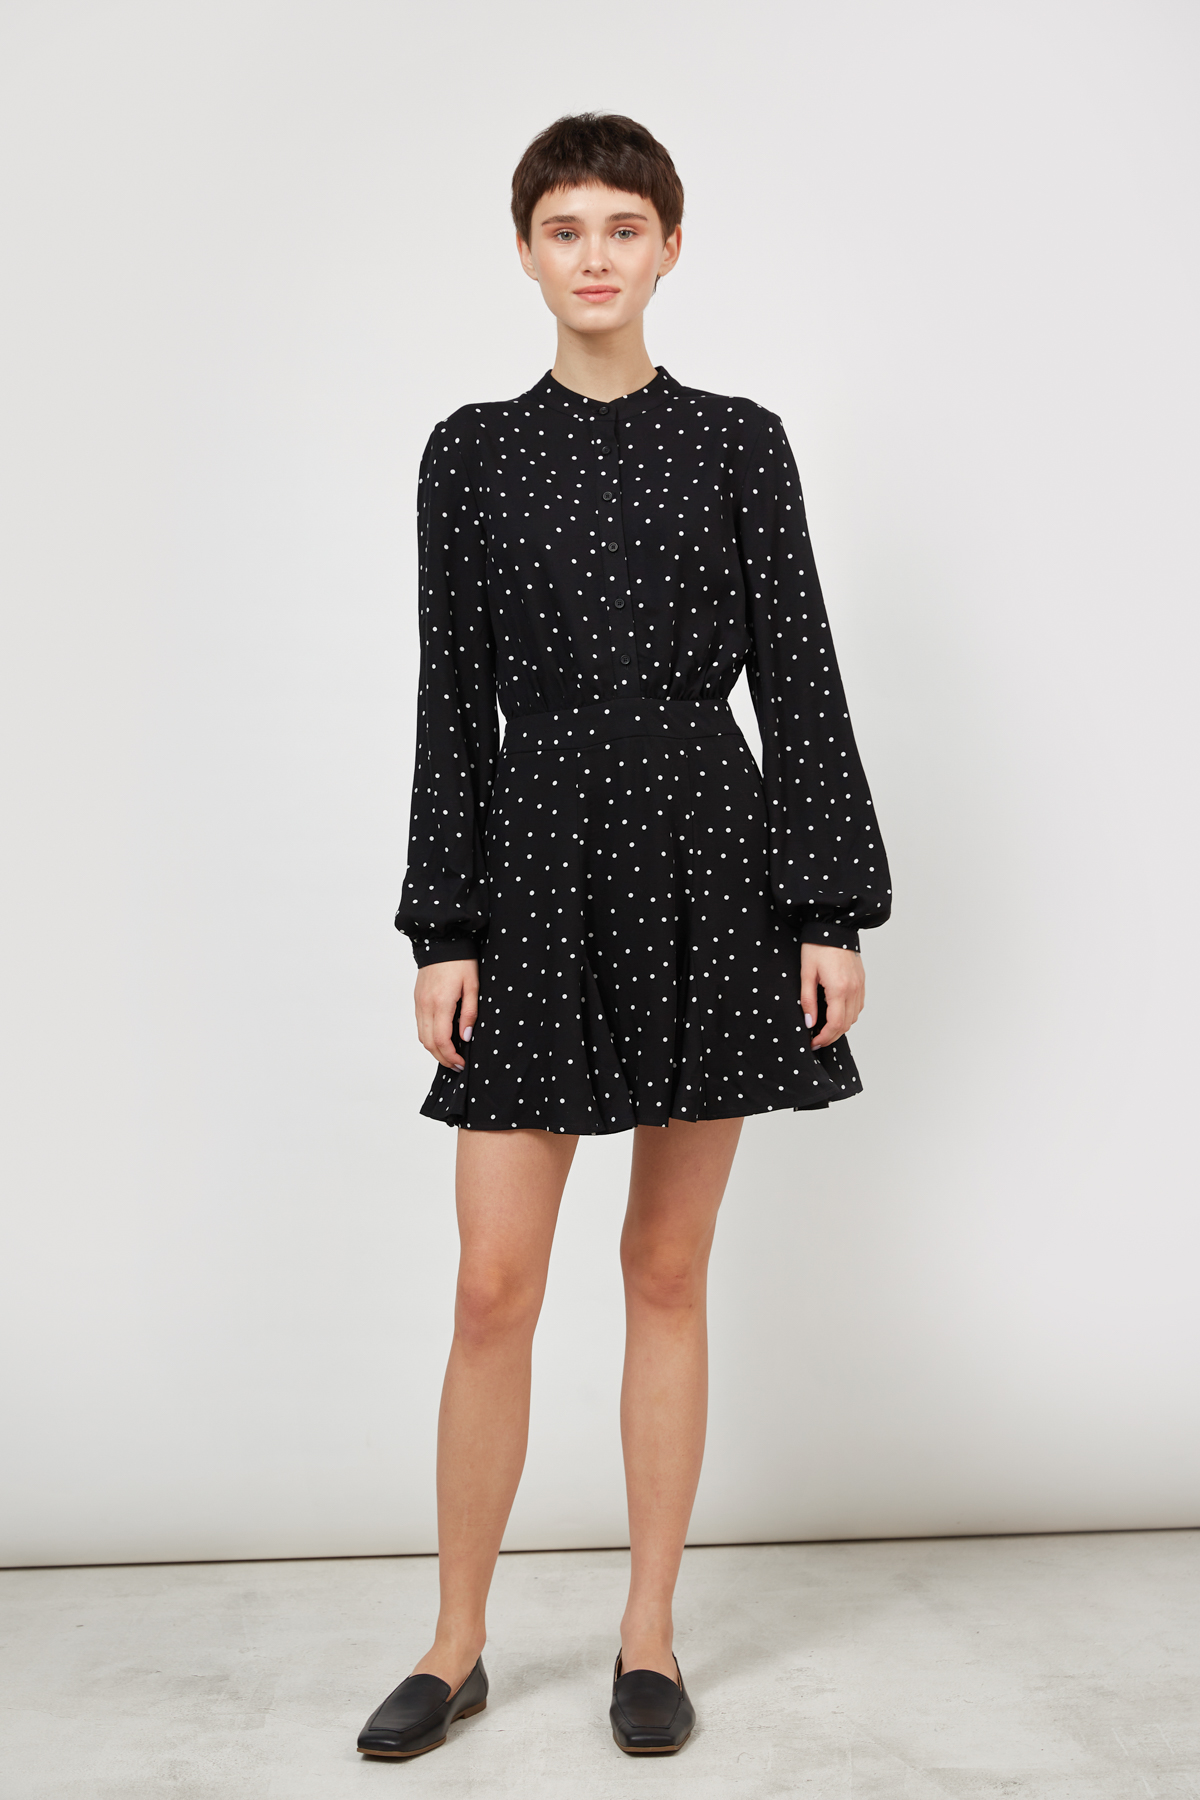 Viscose short dress black in white polka dots print, photo 1